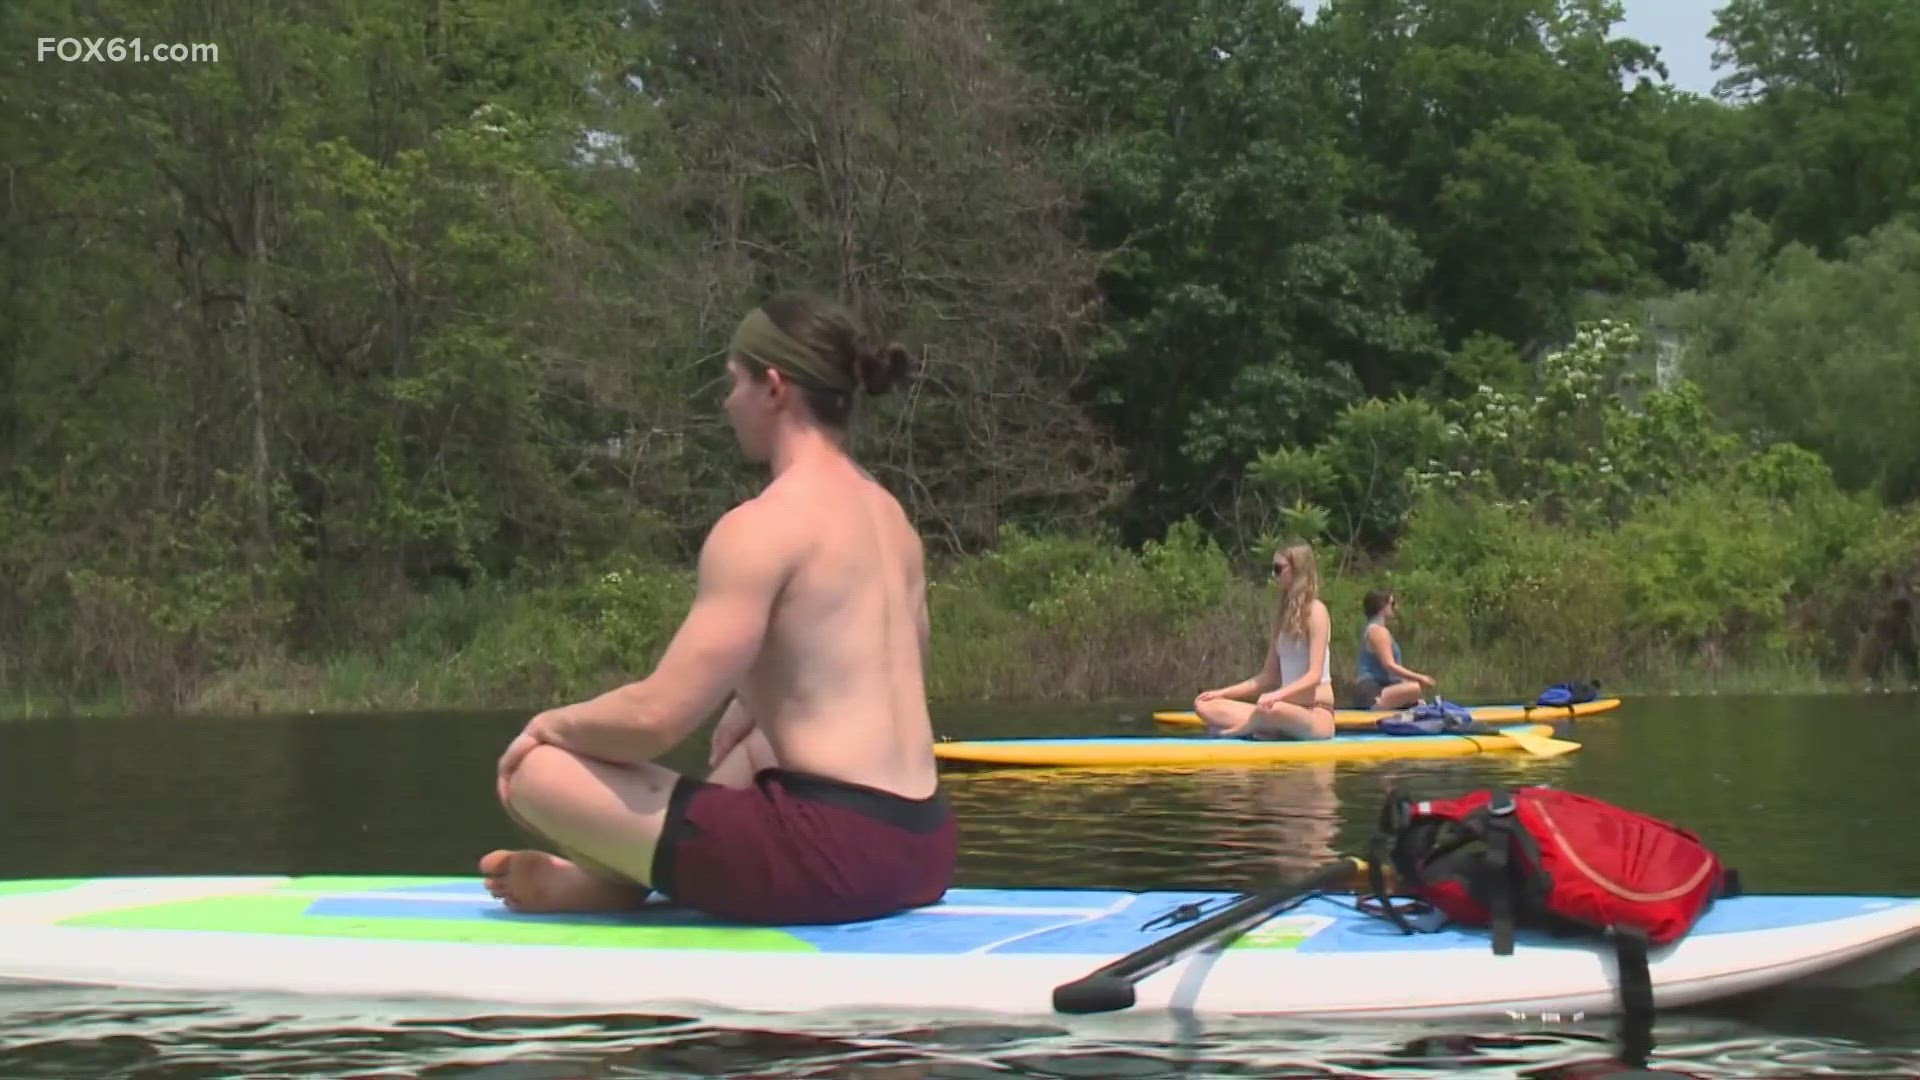 SUP Yoga season starts at Collinsville Canoe and Kayak